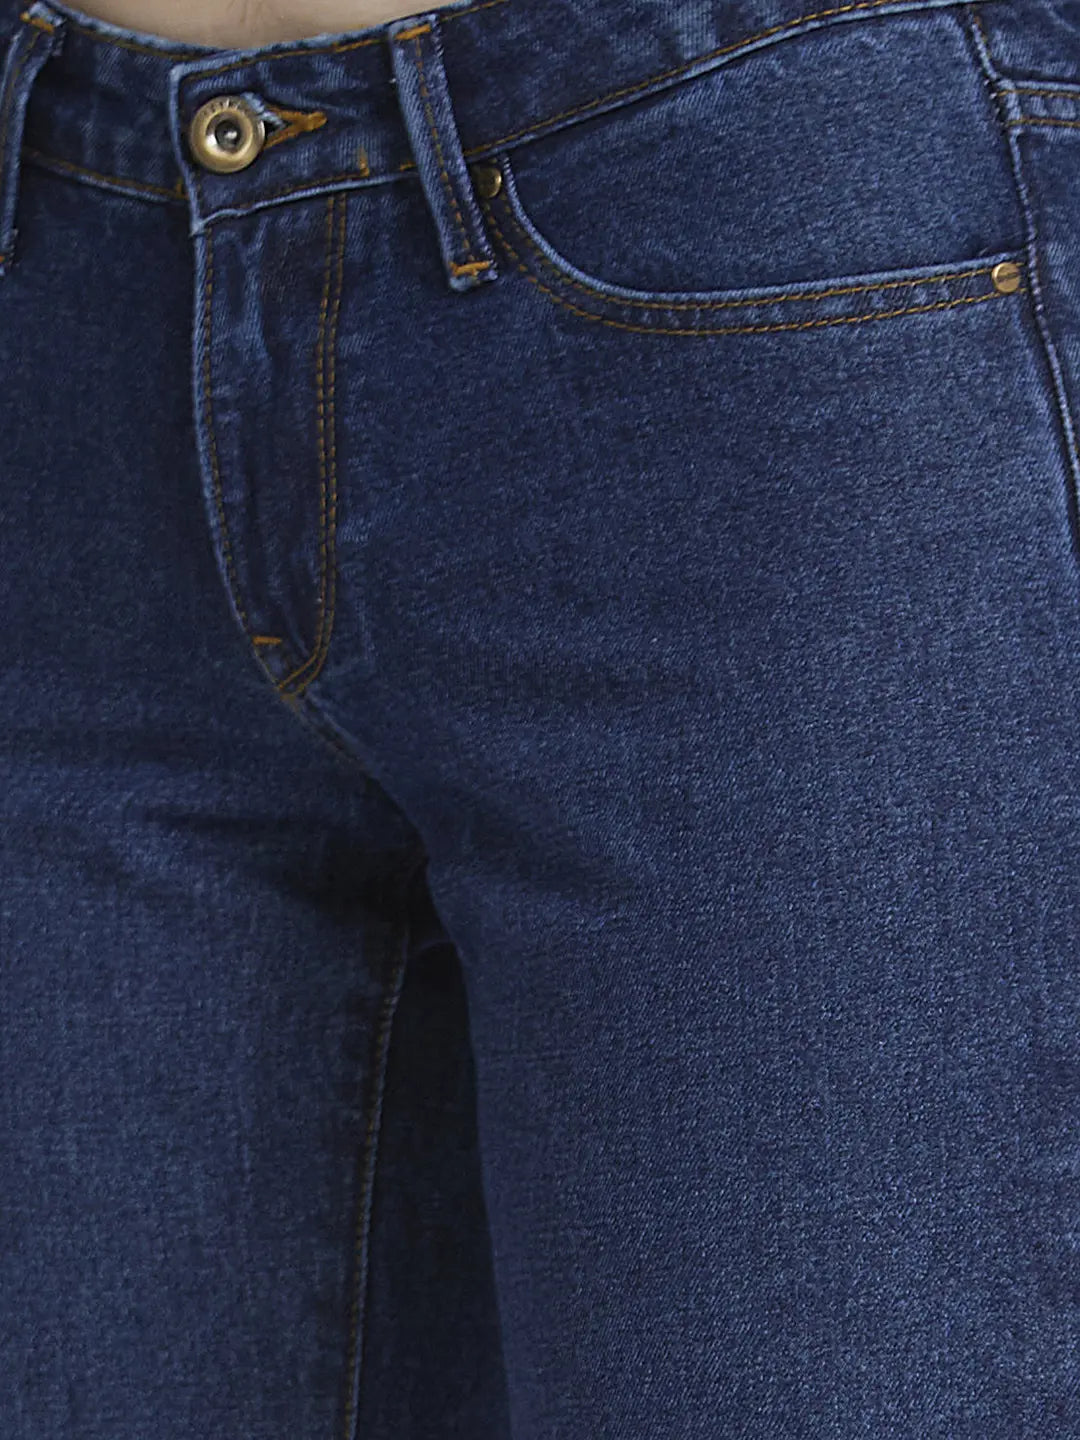 Spykar Women Dark Blue Cotton Straight Fit Regular Length Clean look Jeans -(Bella-low)